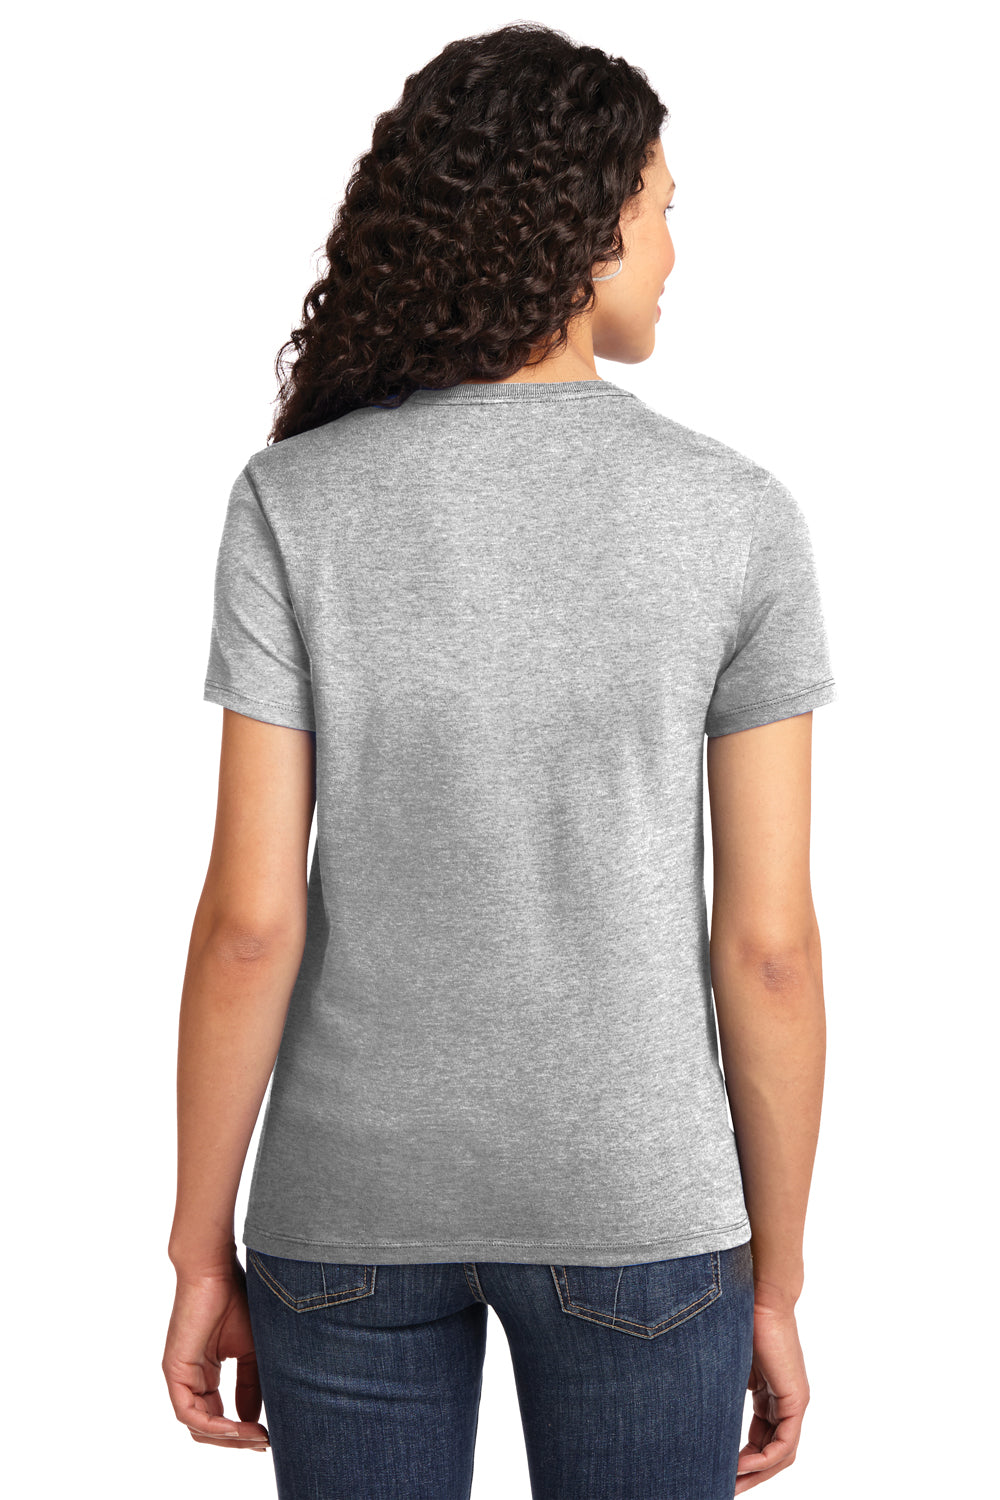 Port & Company LPC61 Womens Essential Short Sleeve Crewneck T-Shirt Ash Grey Back